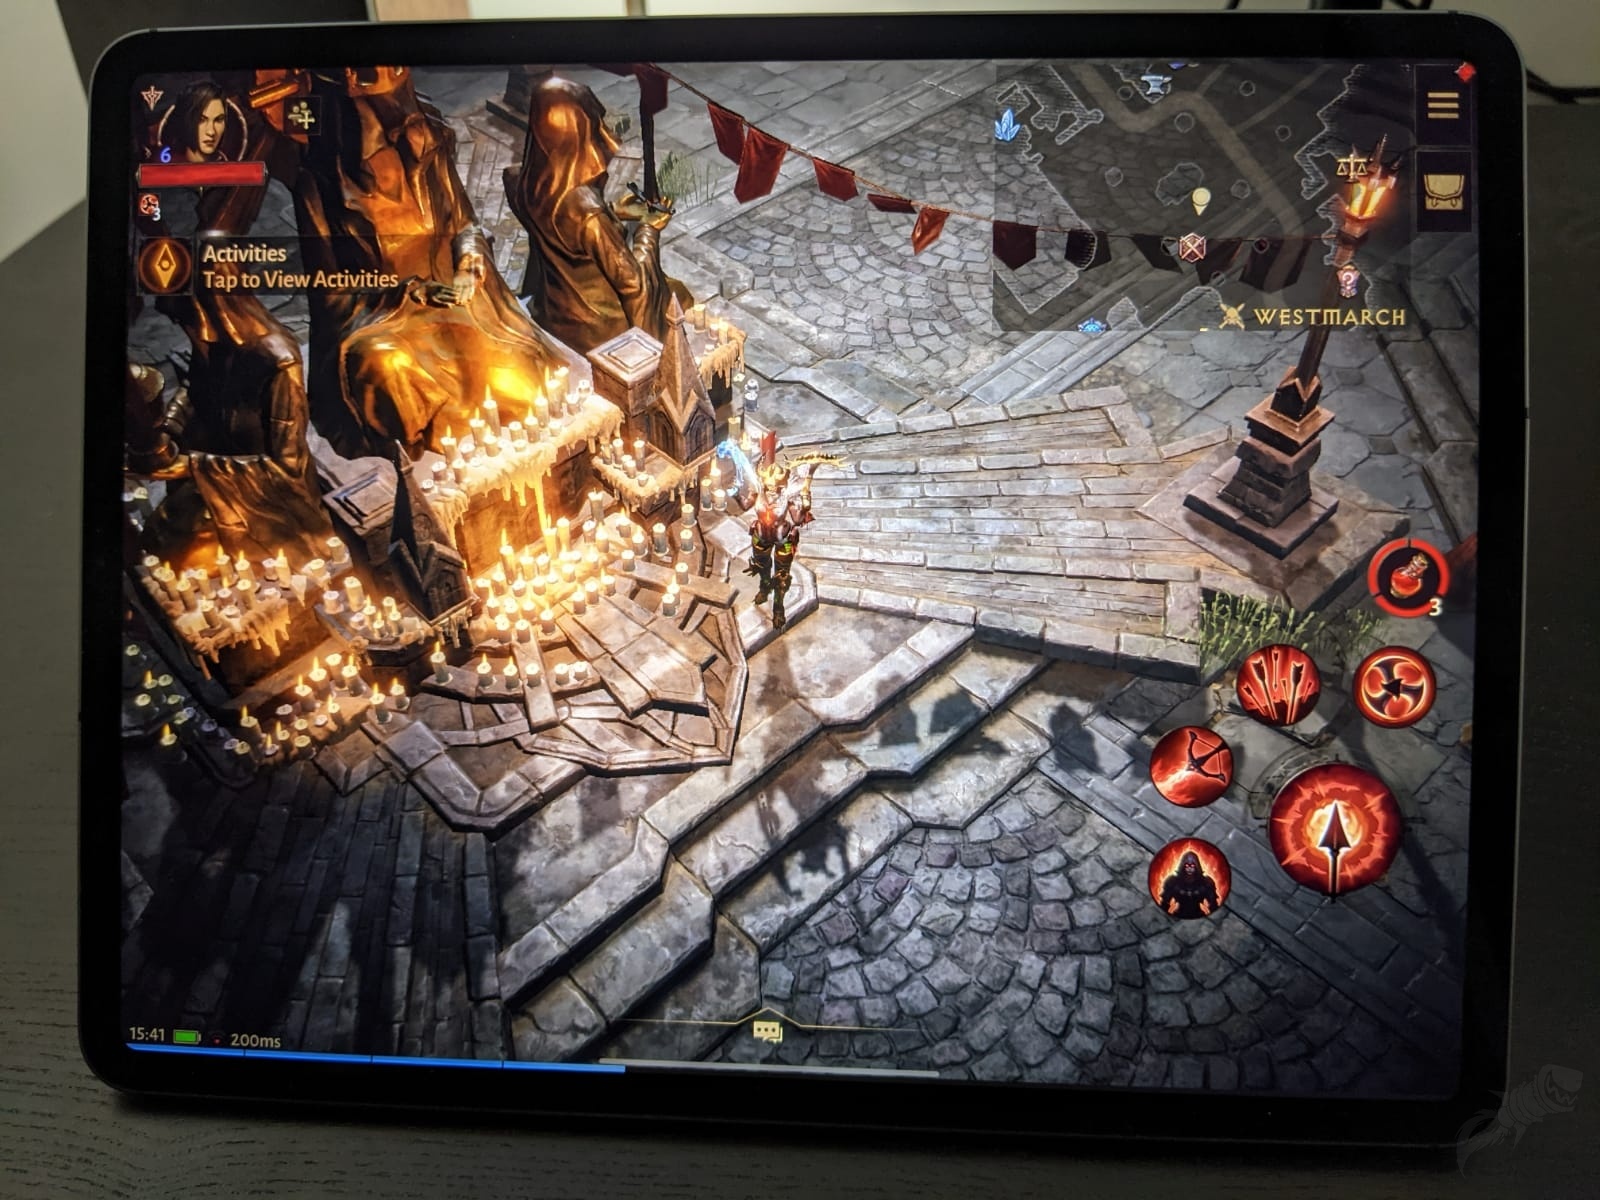 Diablo Immortal (for iOS) Review